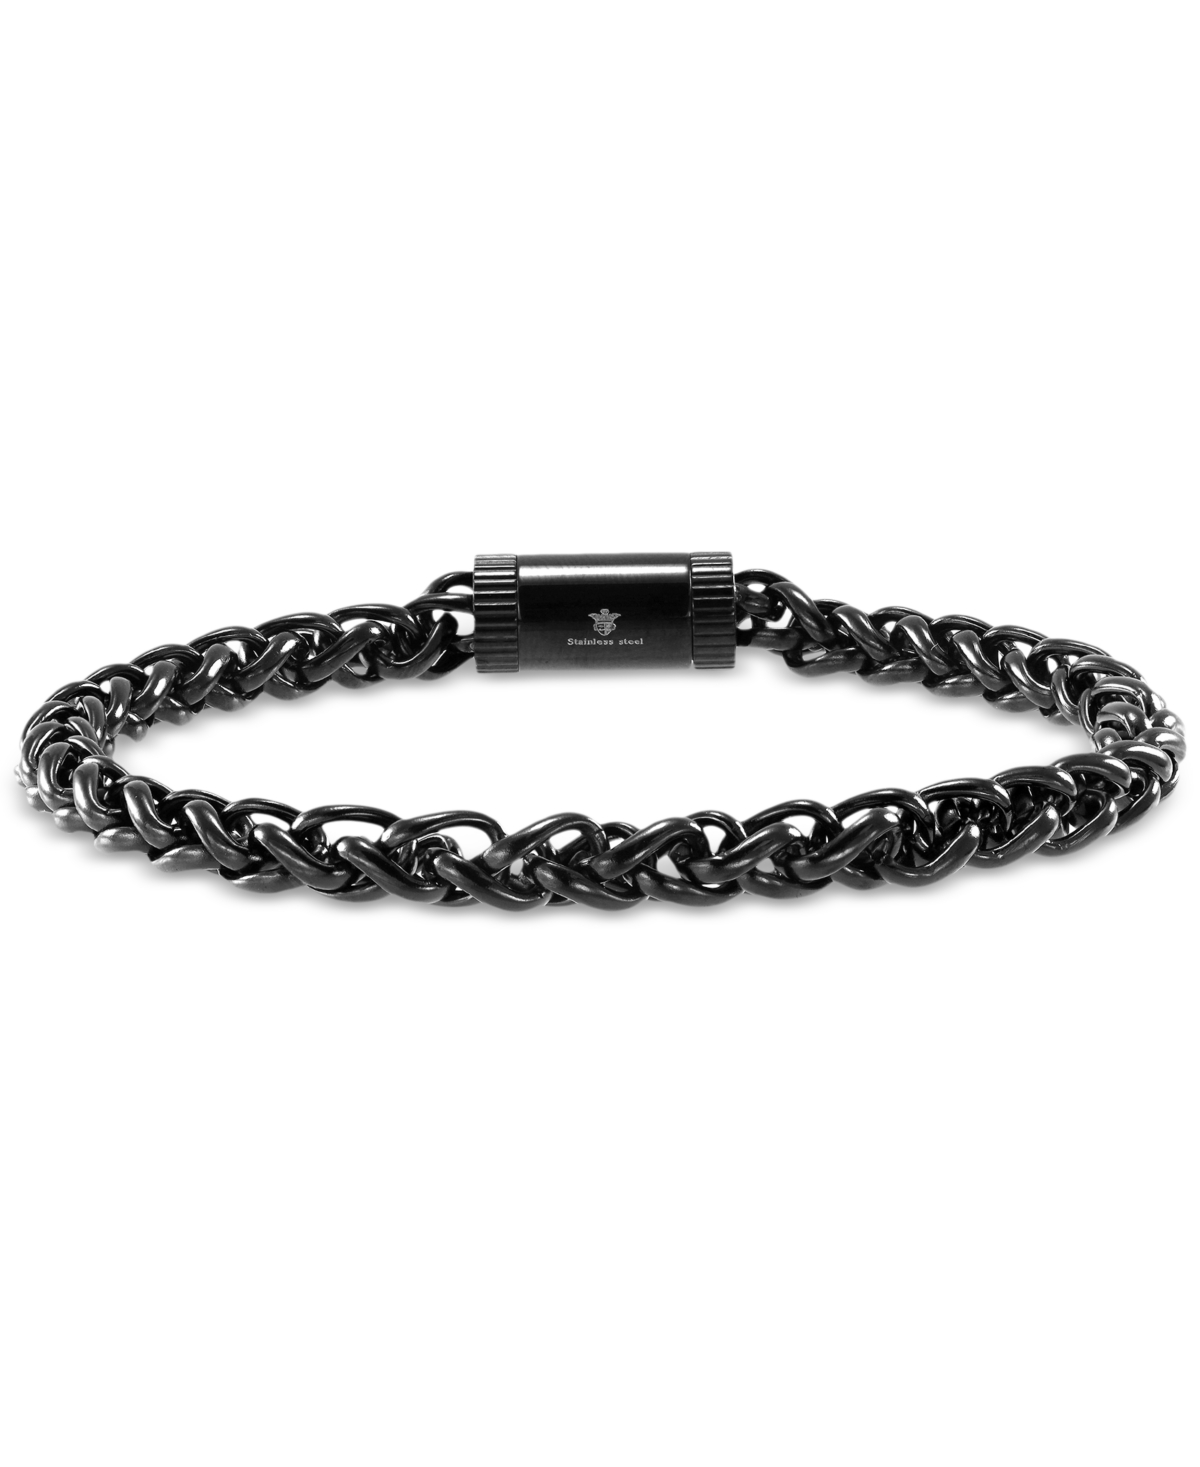 Men's Wheat Link Chain Bracelet in Stainless Steel - Black